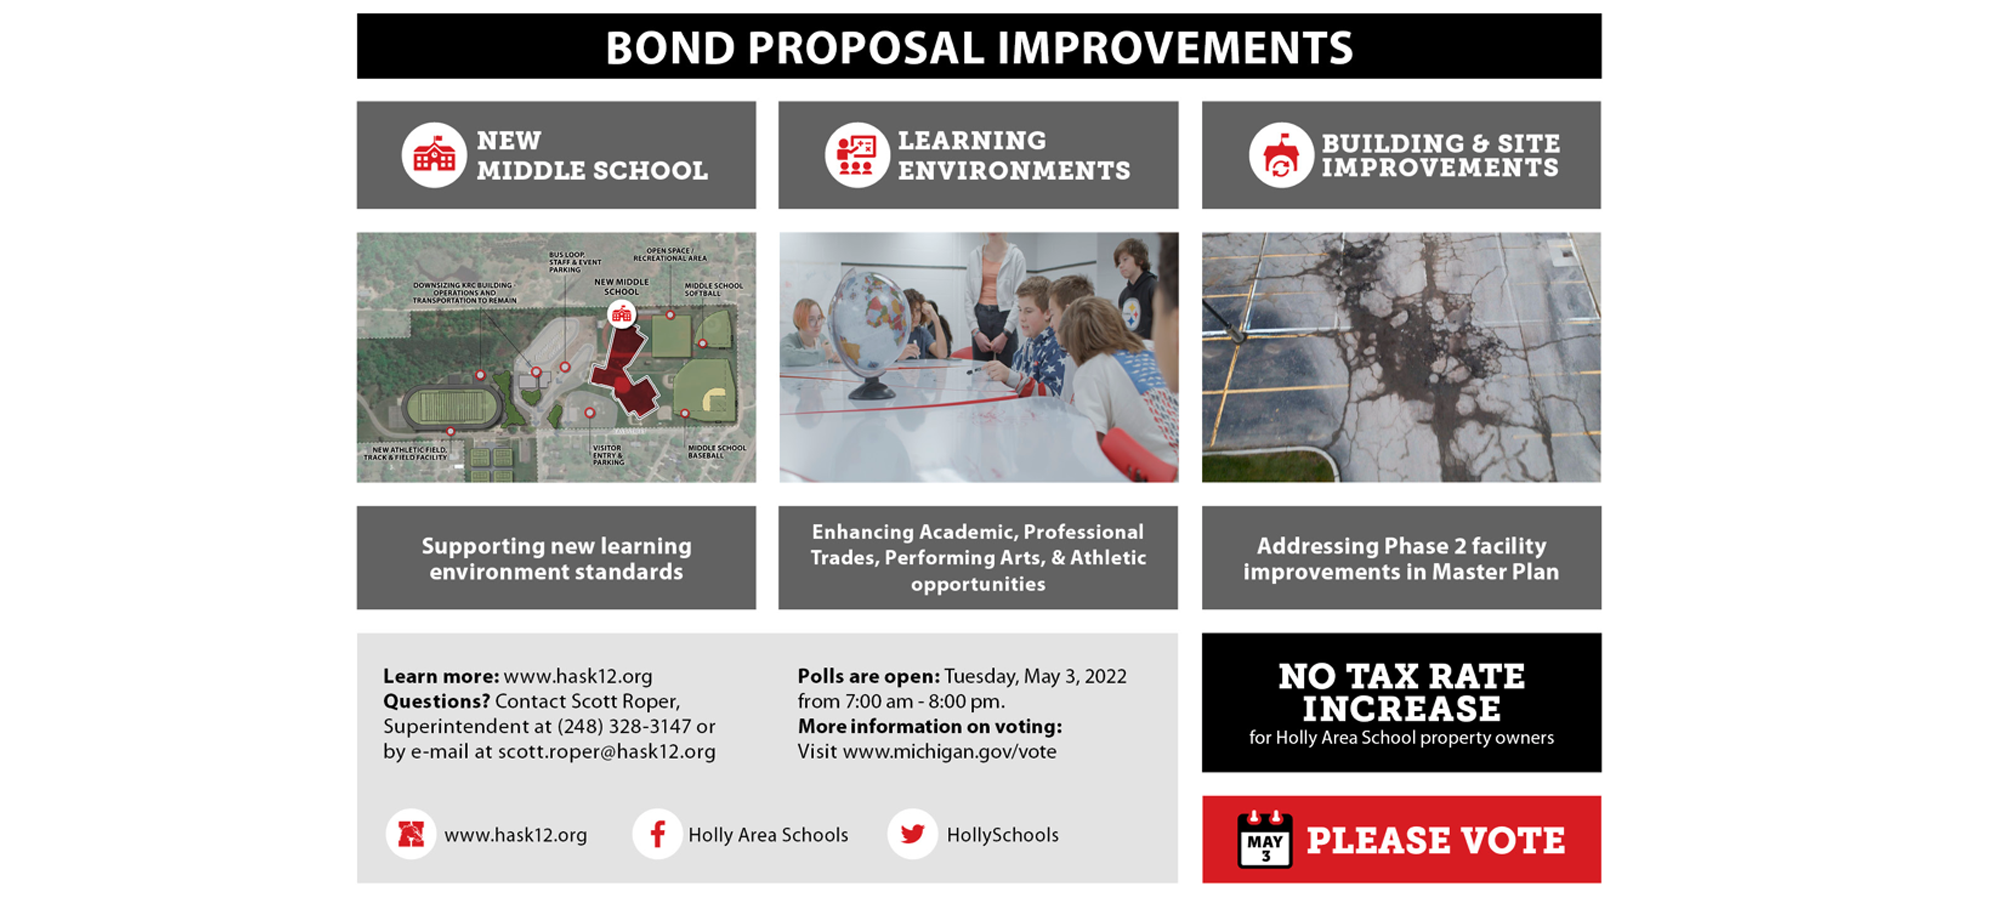 Bond Proposal Improvements document